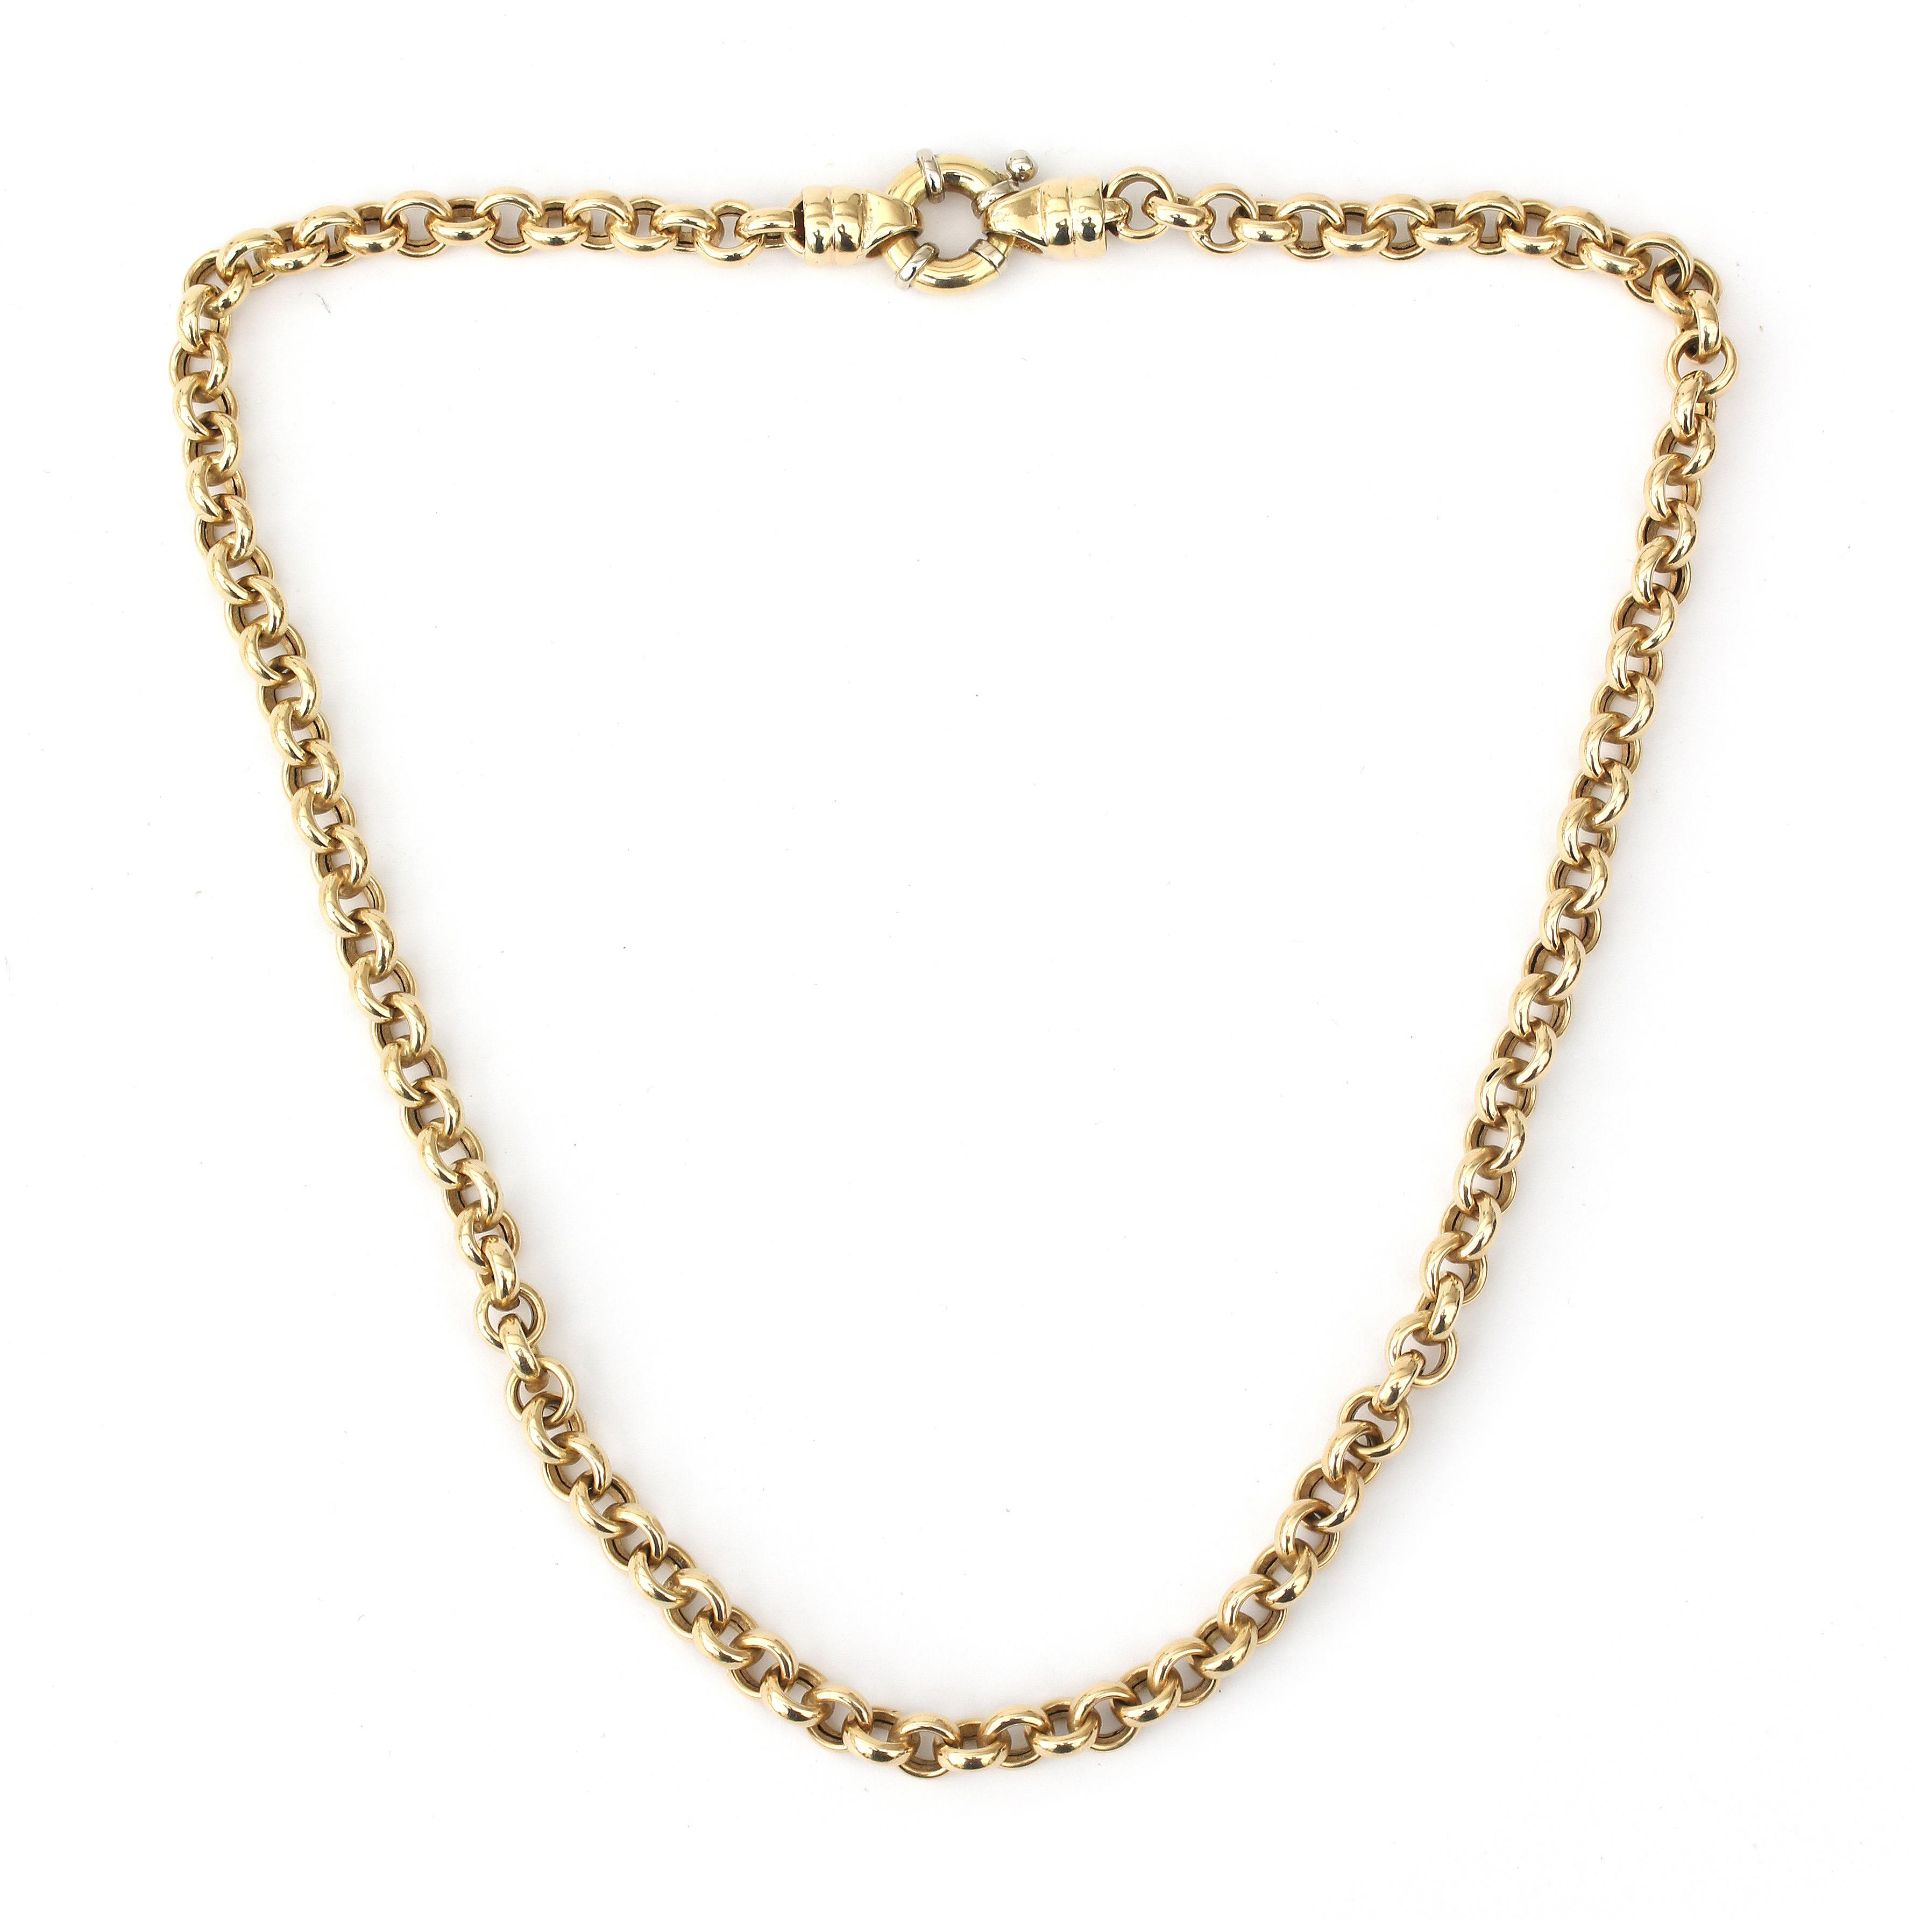 A 14 karat gold link necklace